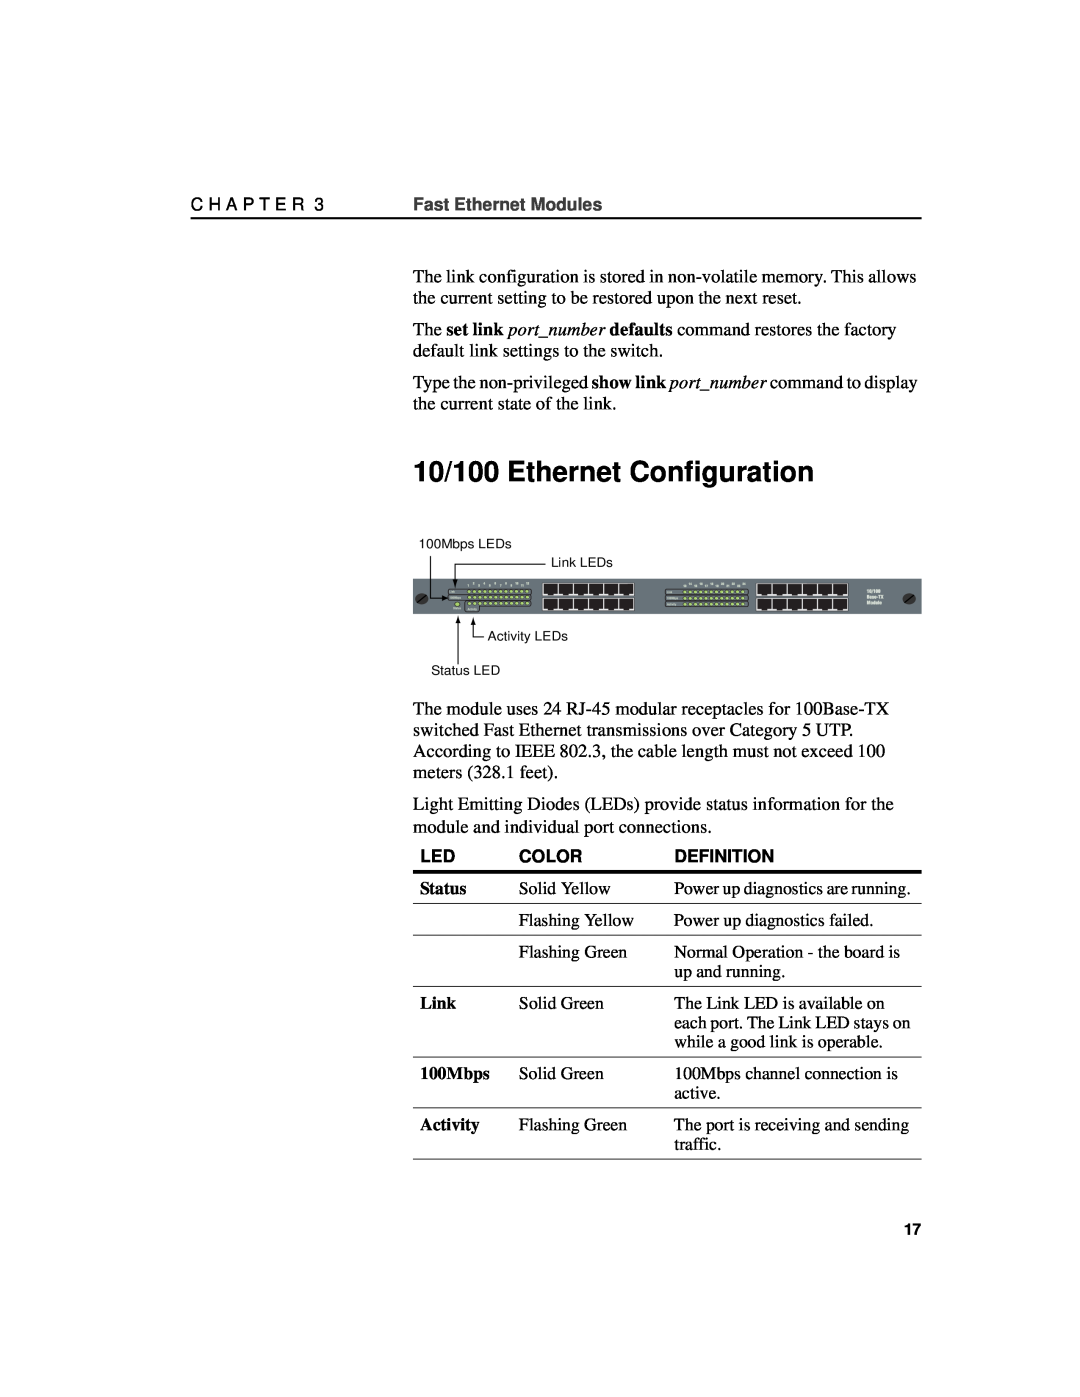 Intel A21721-001 manual 10/100 Ethernet Configuration, Fast Ethernet Modules 